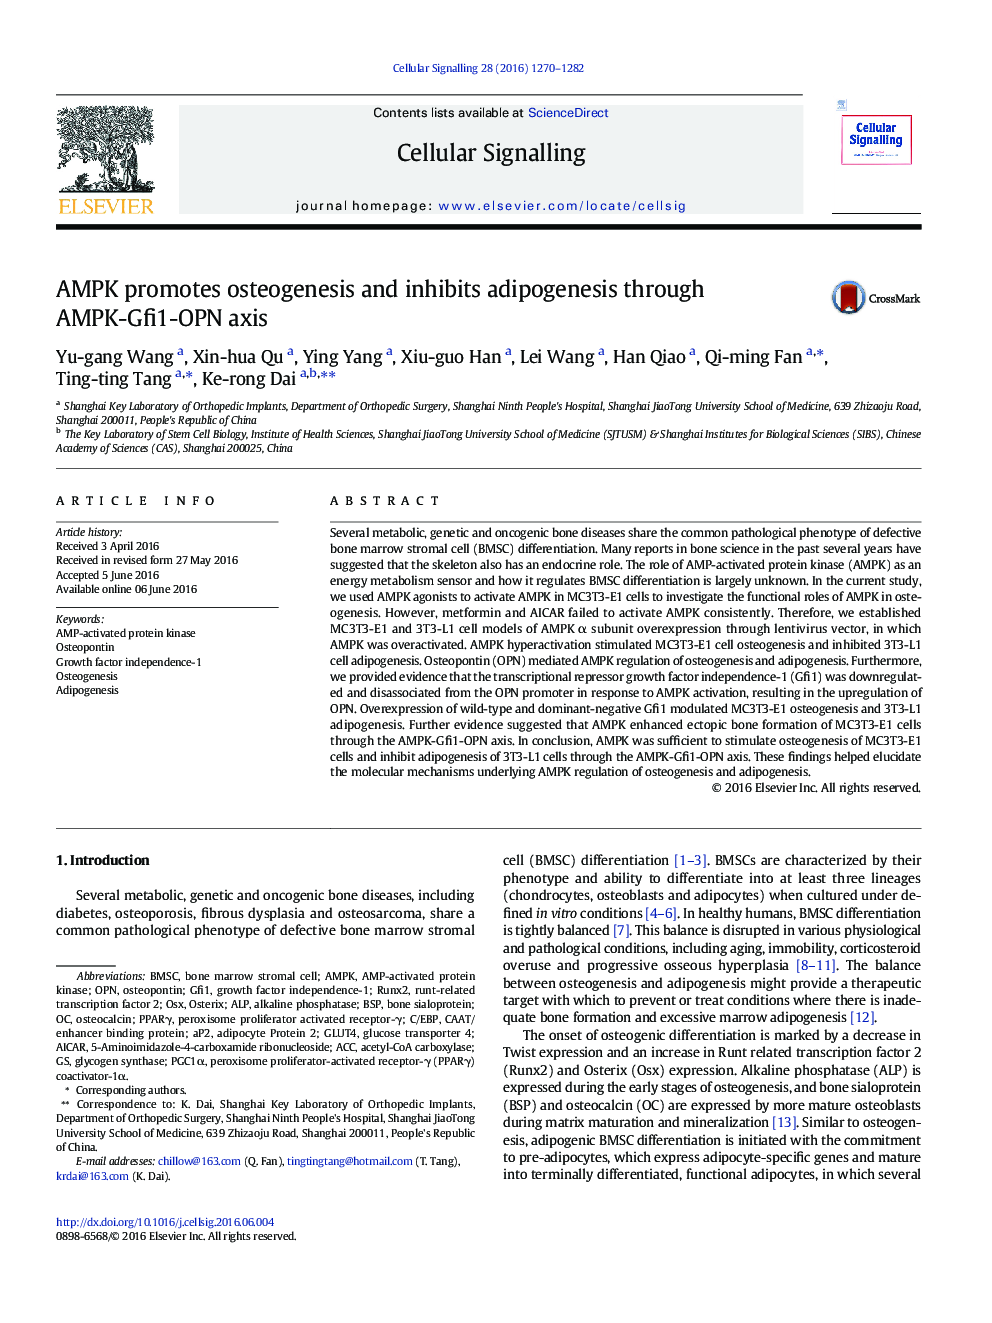 AMPK promotes osteogenesis and inhibits adipogenesis through AMPK-Gfi1-OPN axis